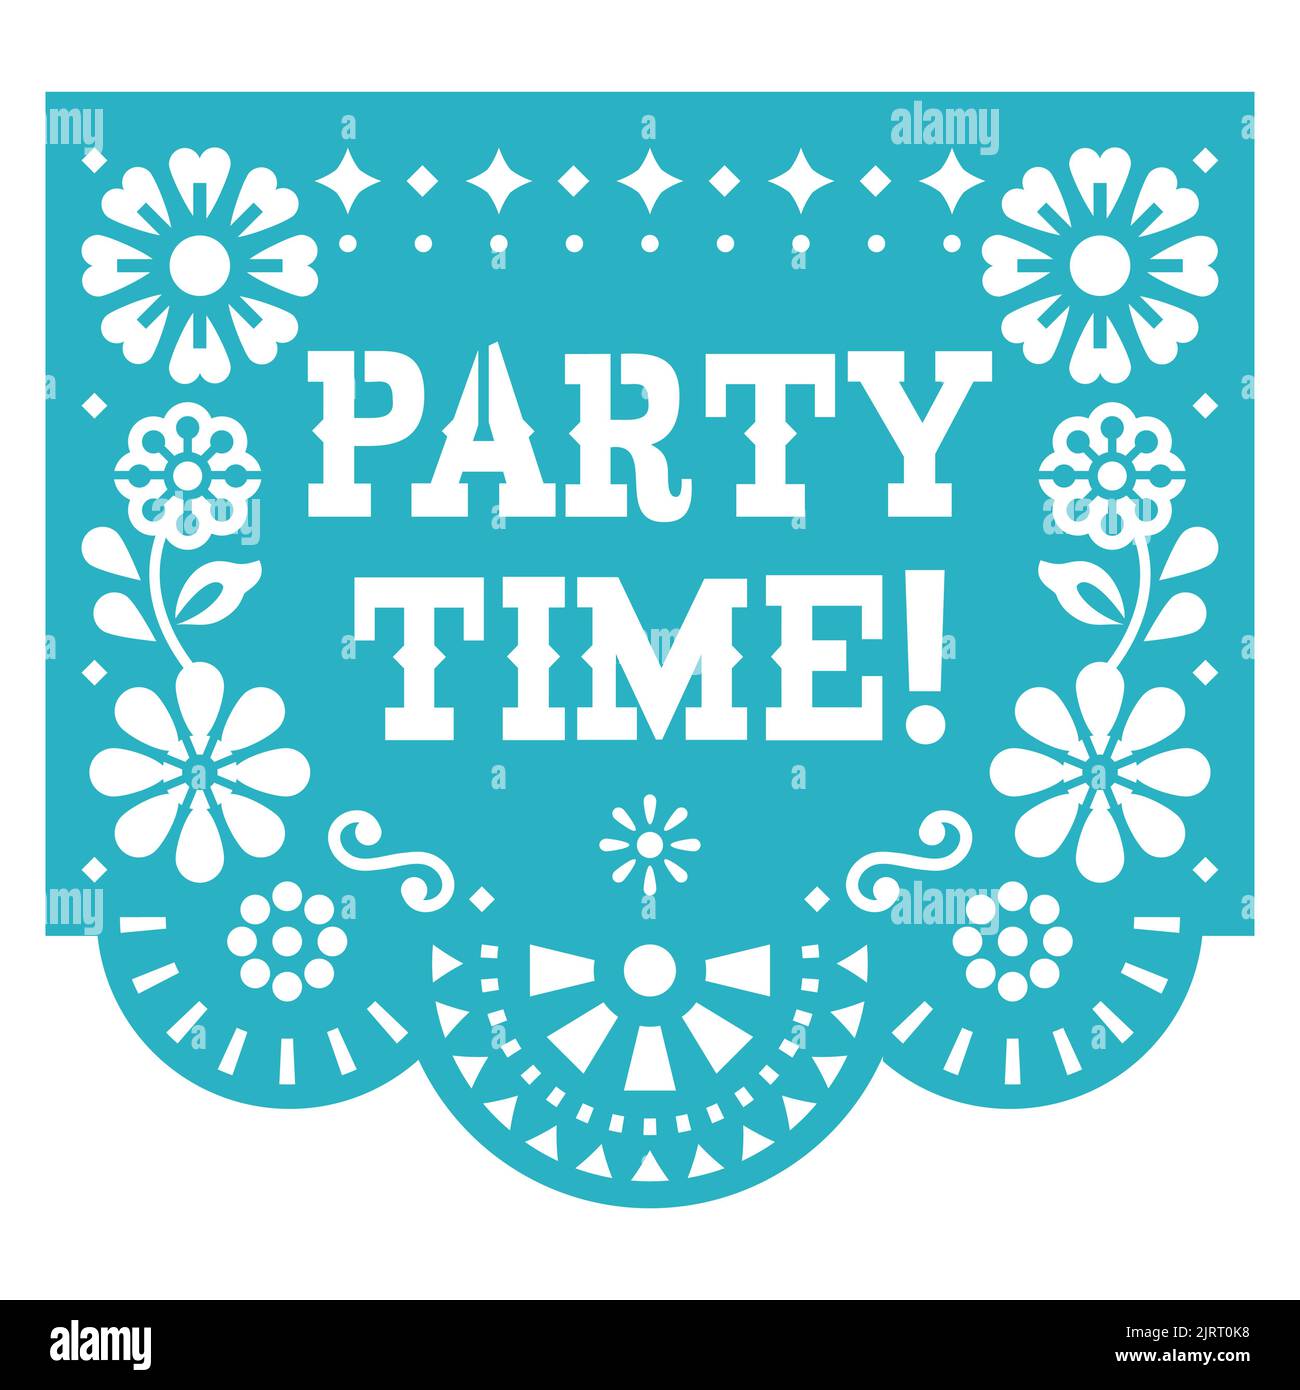 Party time! Papel Picado vector design, retro Mexican garland paper cutout pattern Stock Vector